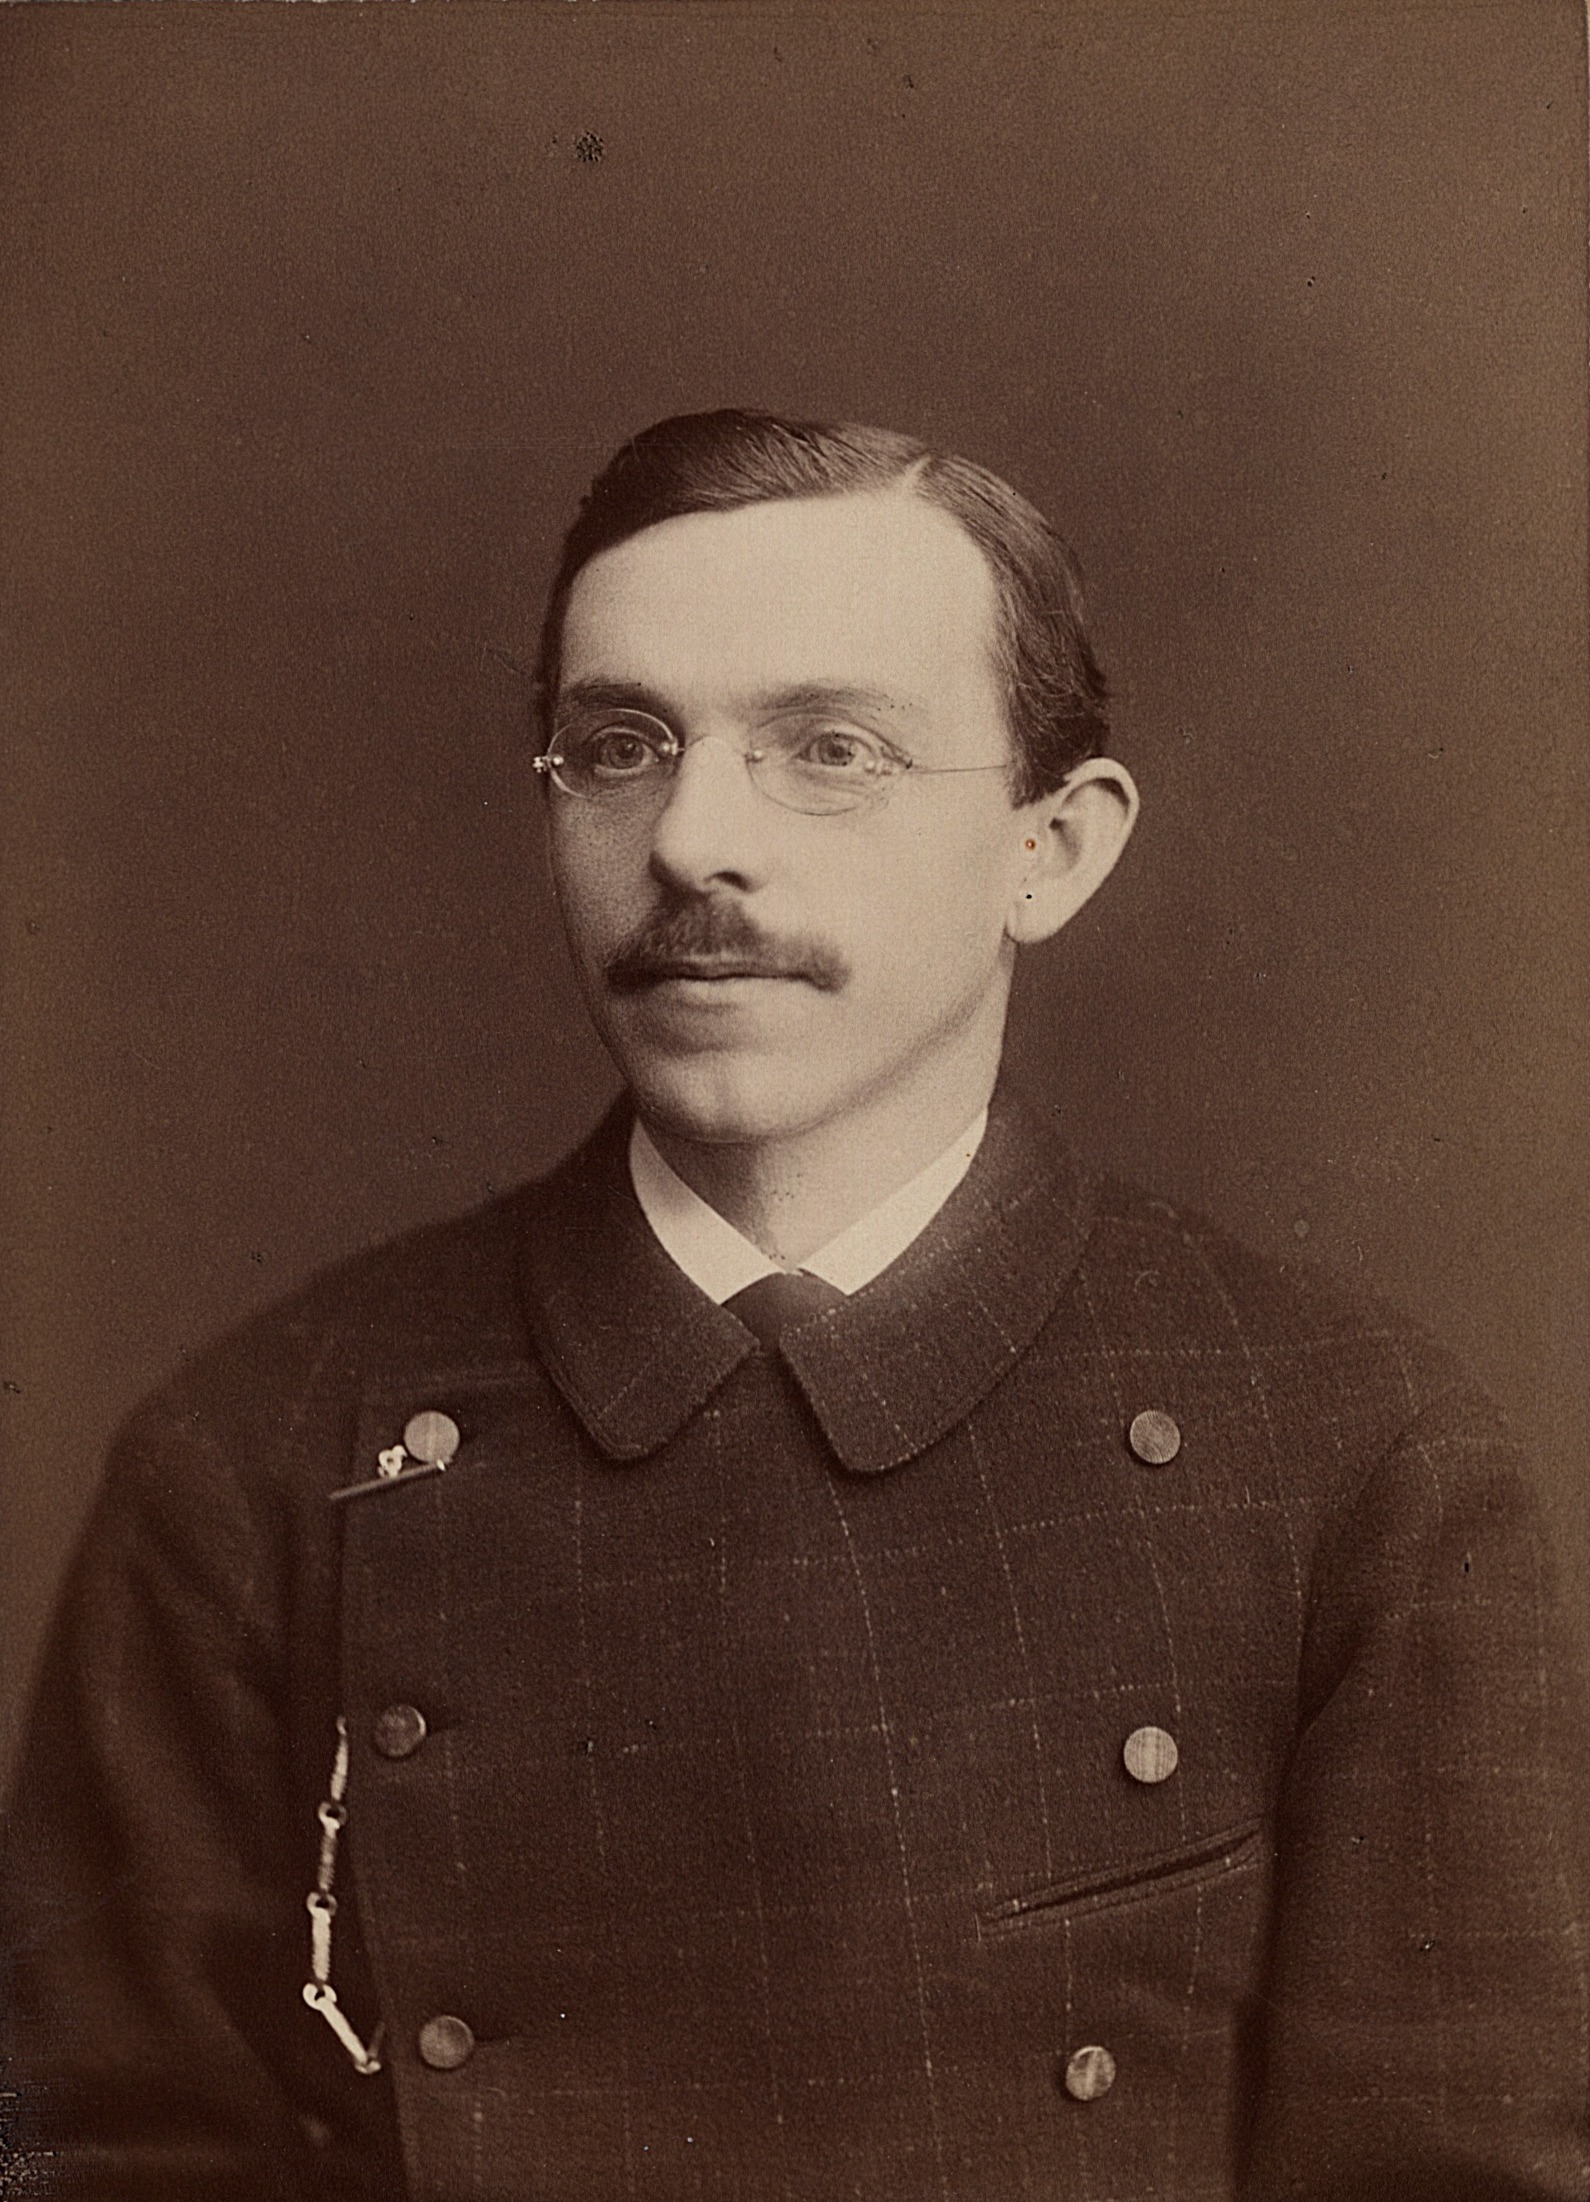 ETH-BIB-Ritter, Karl Wilhelm (1847-1906)-Portrait-Portr 00873.tif (cropped)